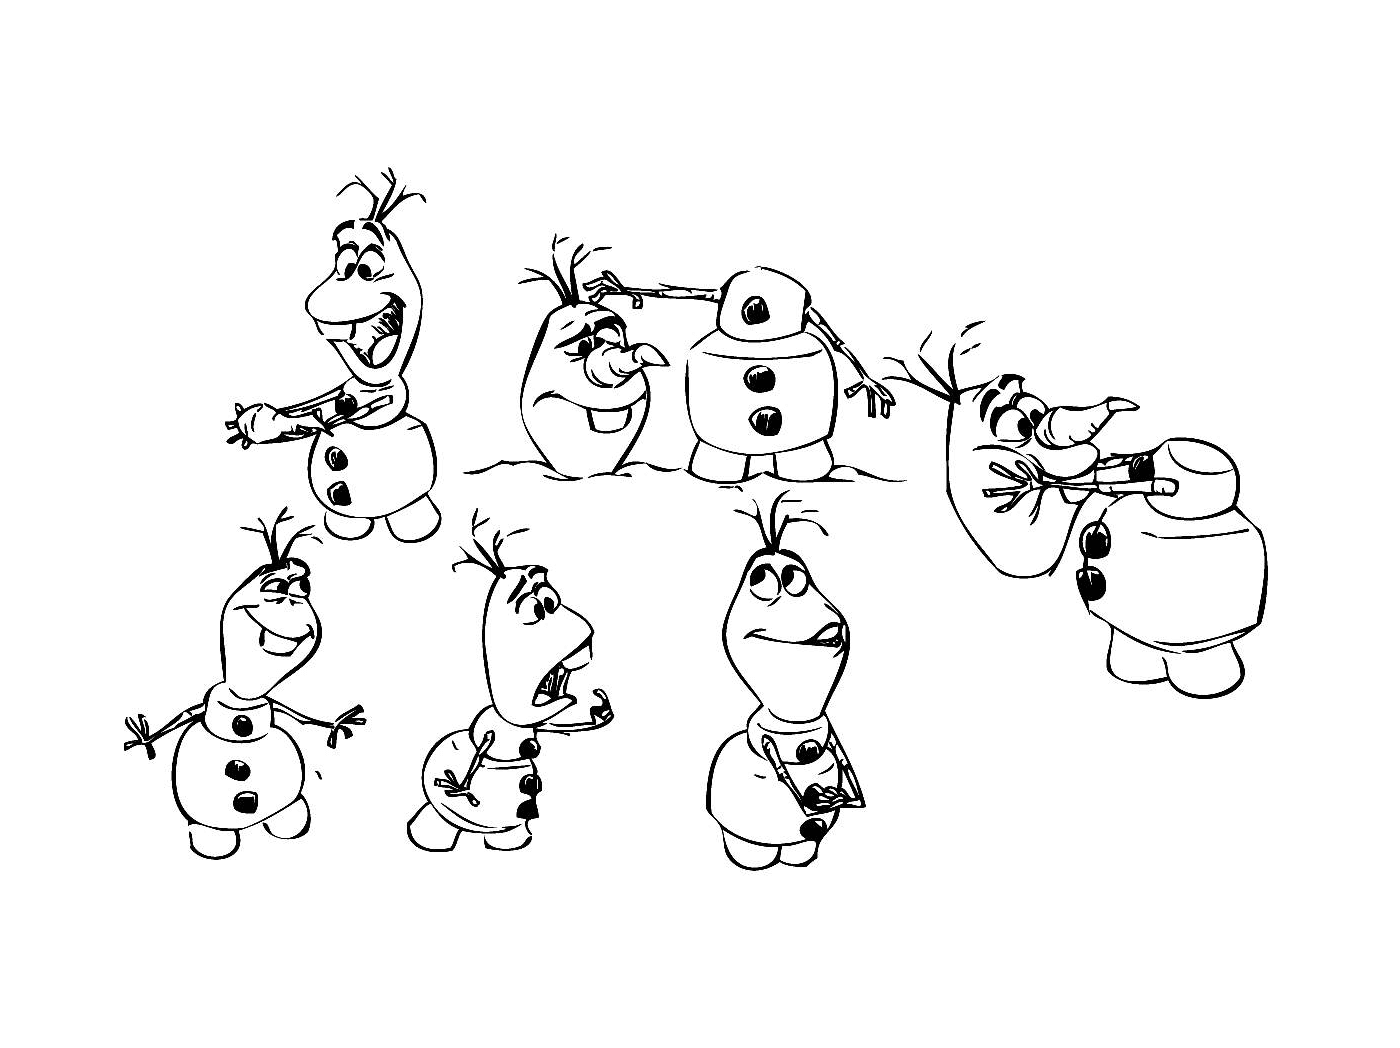  Olaf Reina de los Dibujos 